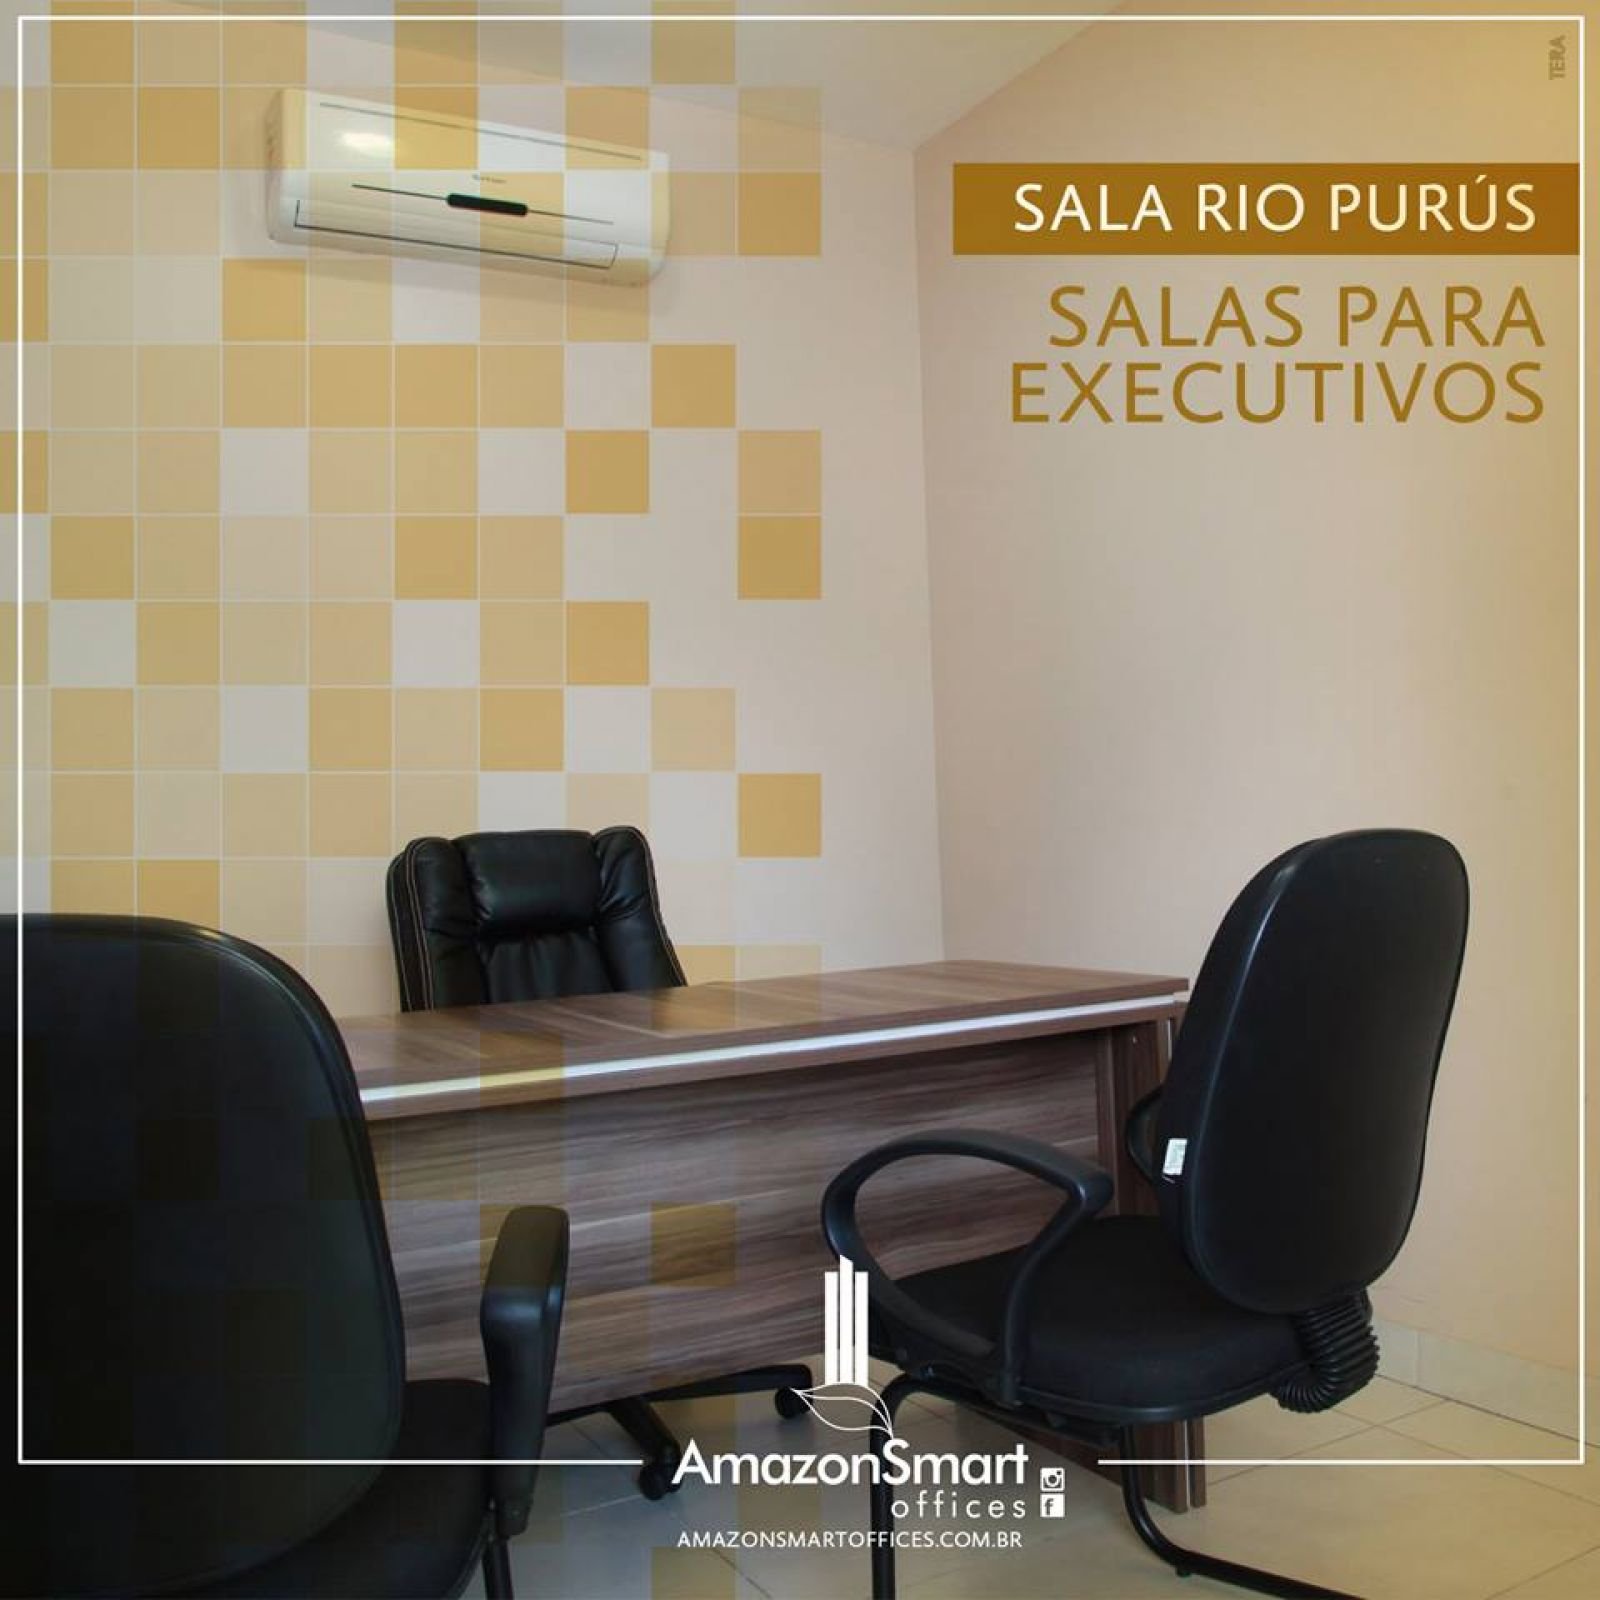 Amazon Smart Offices / South America / Latin America / Brazil / Manaus